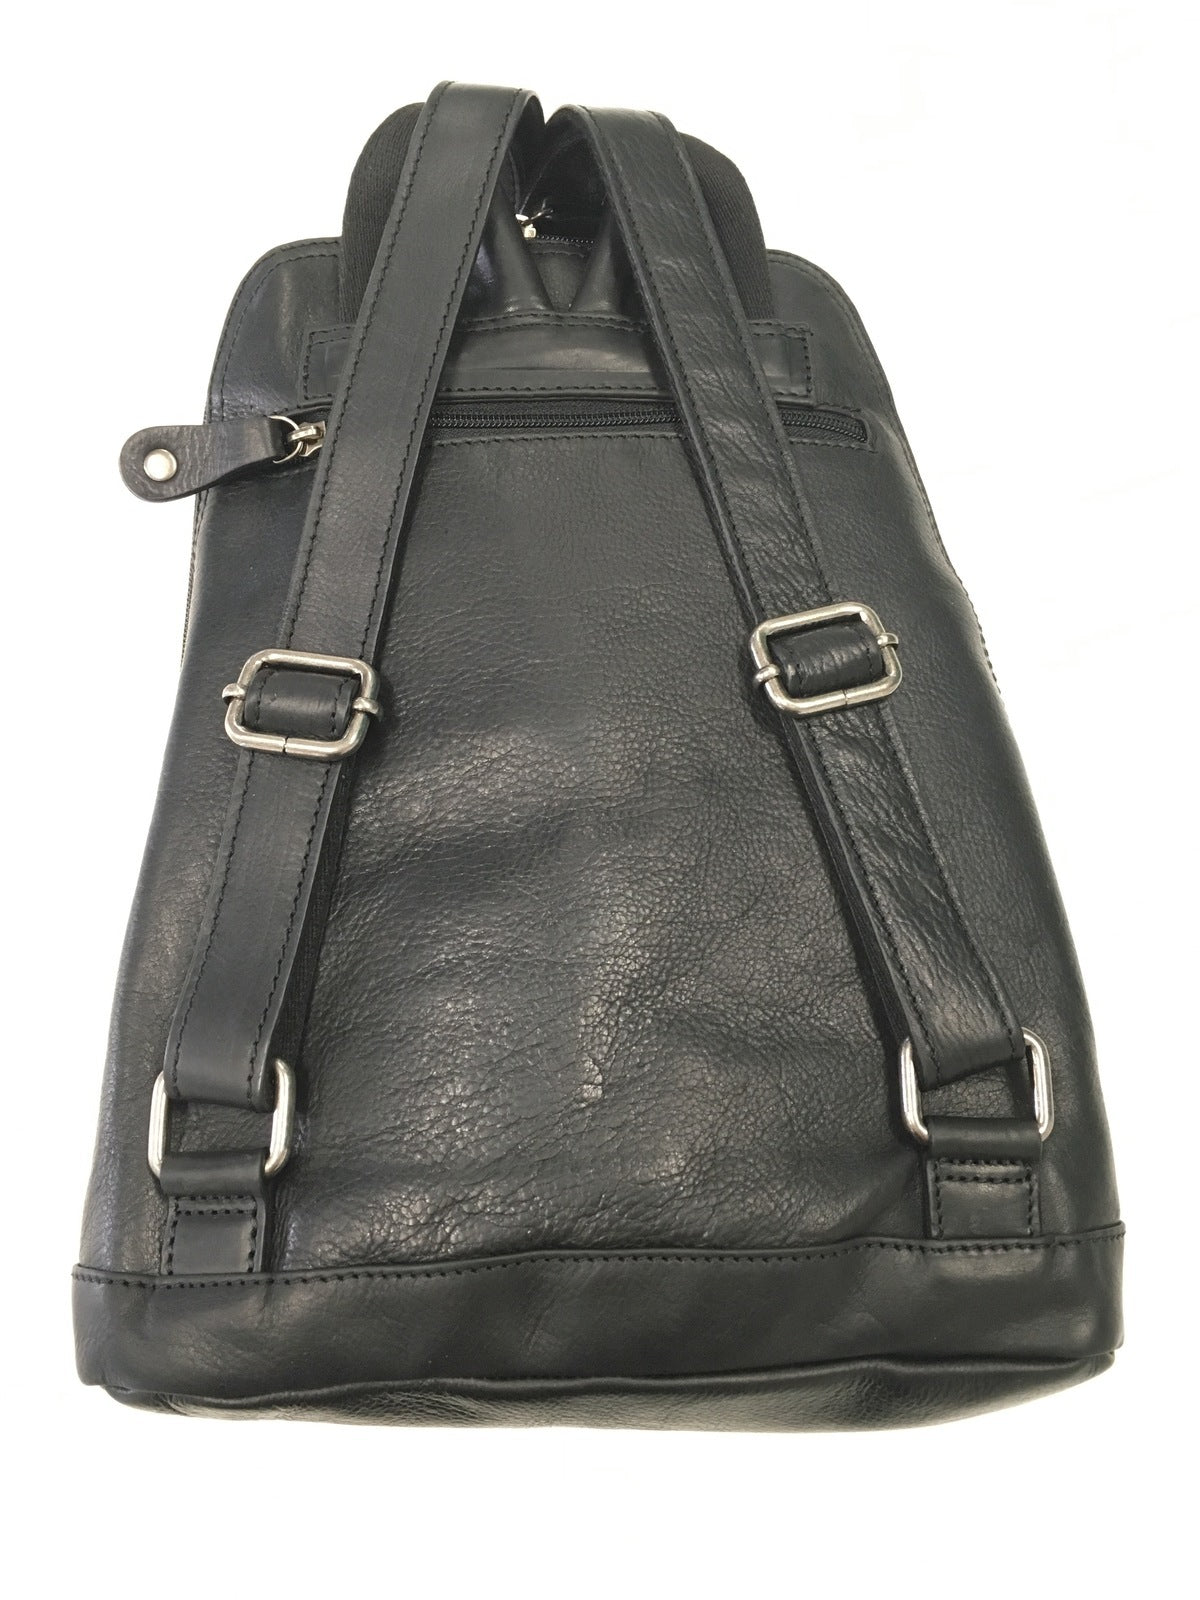 Milleni Genuine Italian Leather Soft Nappa Leather Backpack Travel Bag - Black